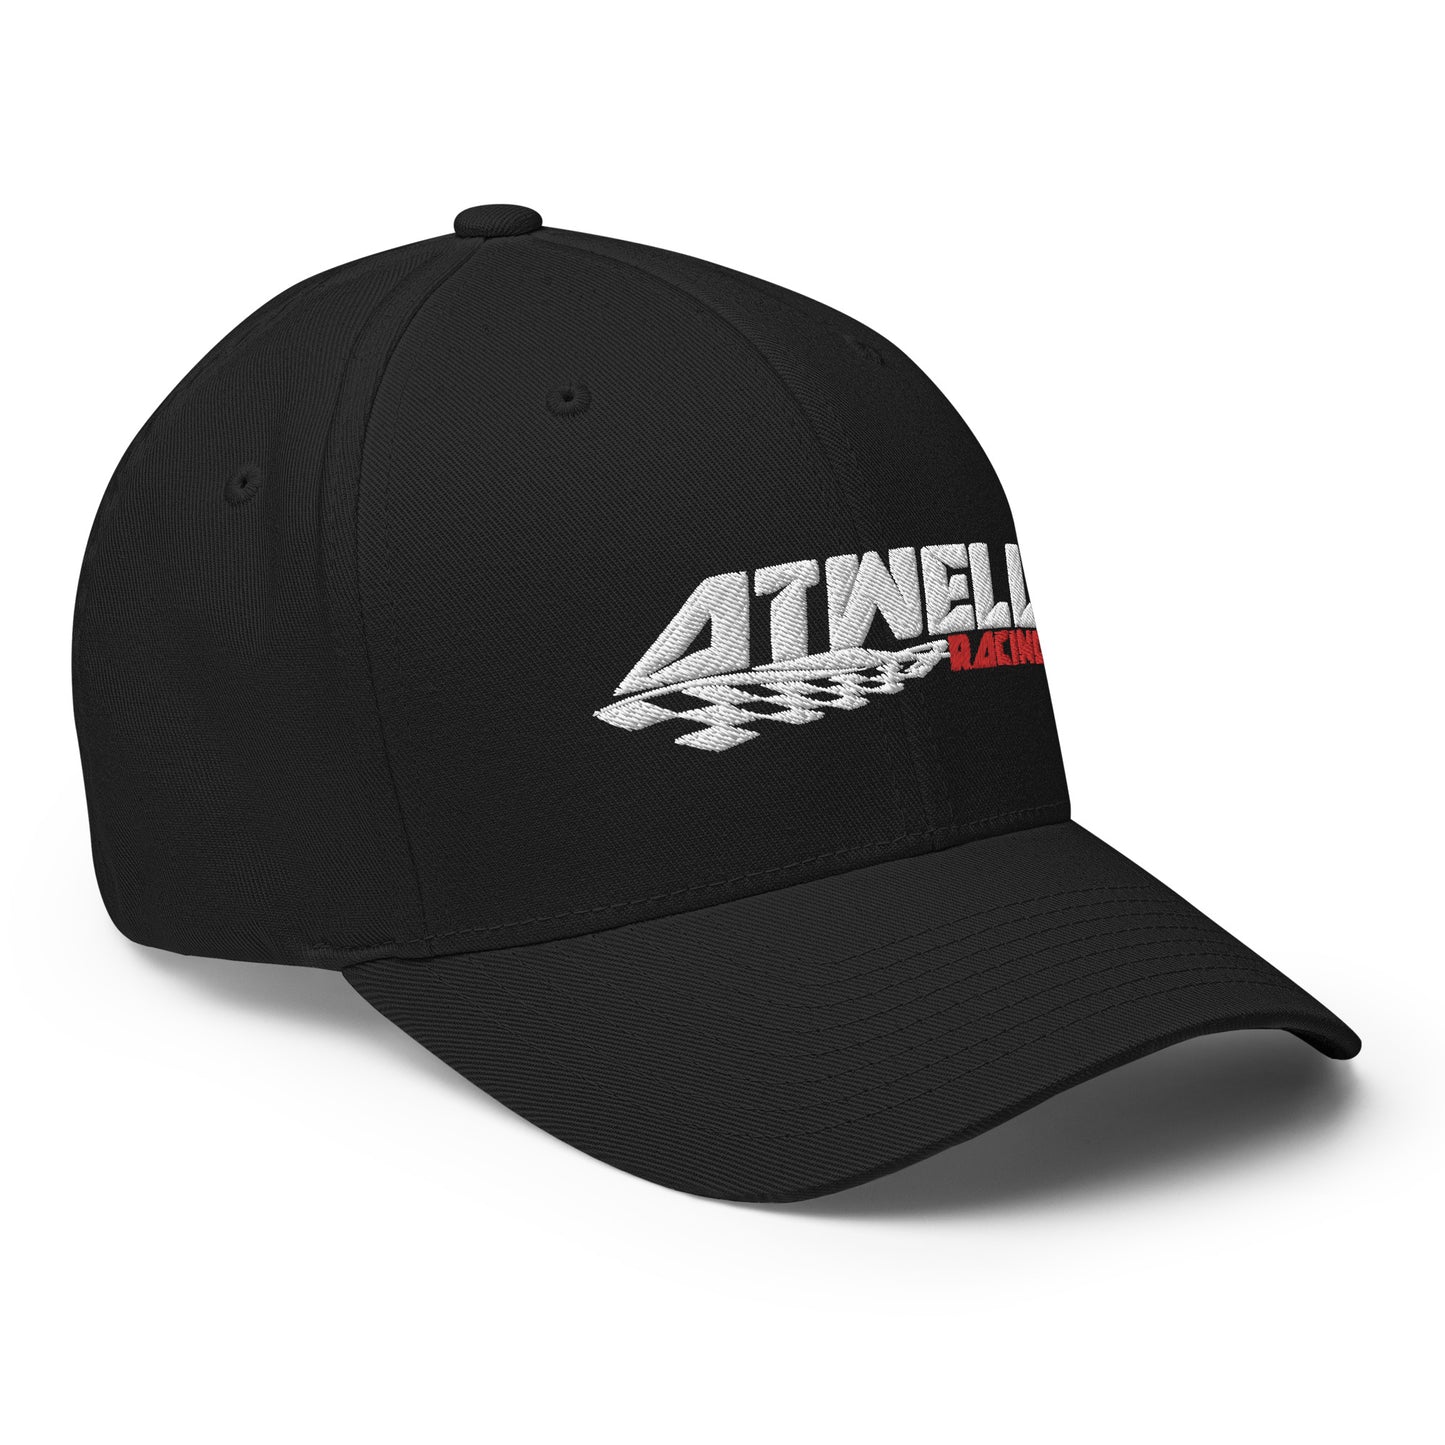 Atwell Racing Flex Fit Hat